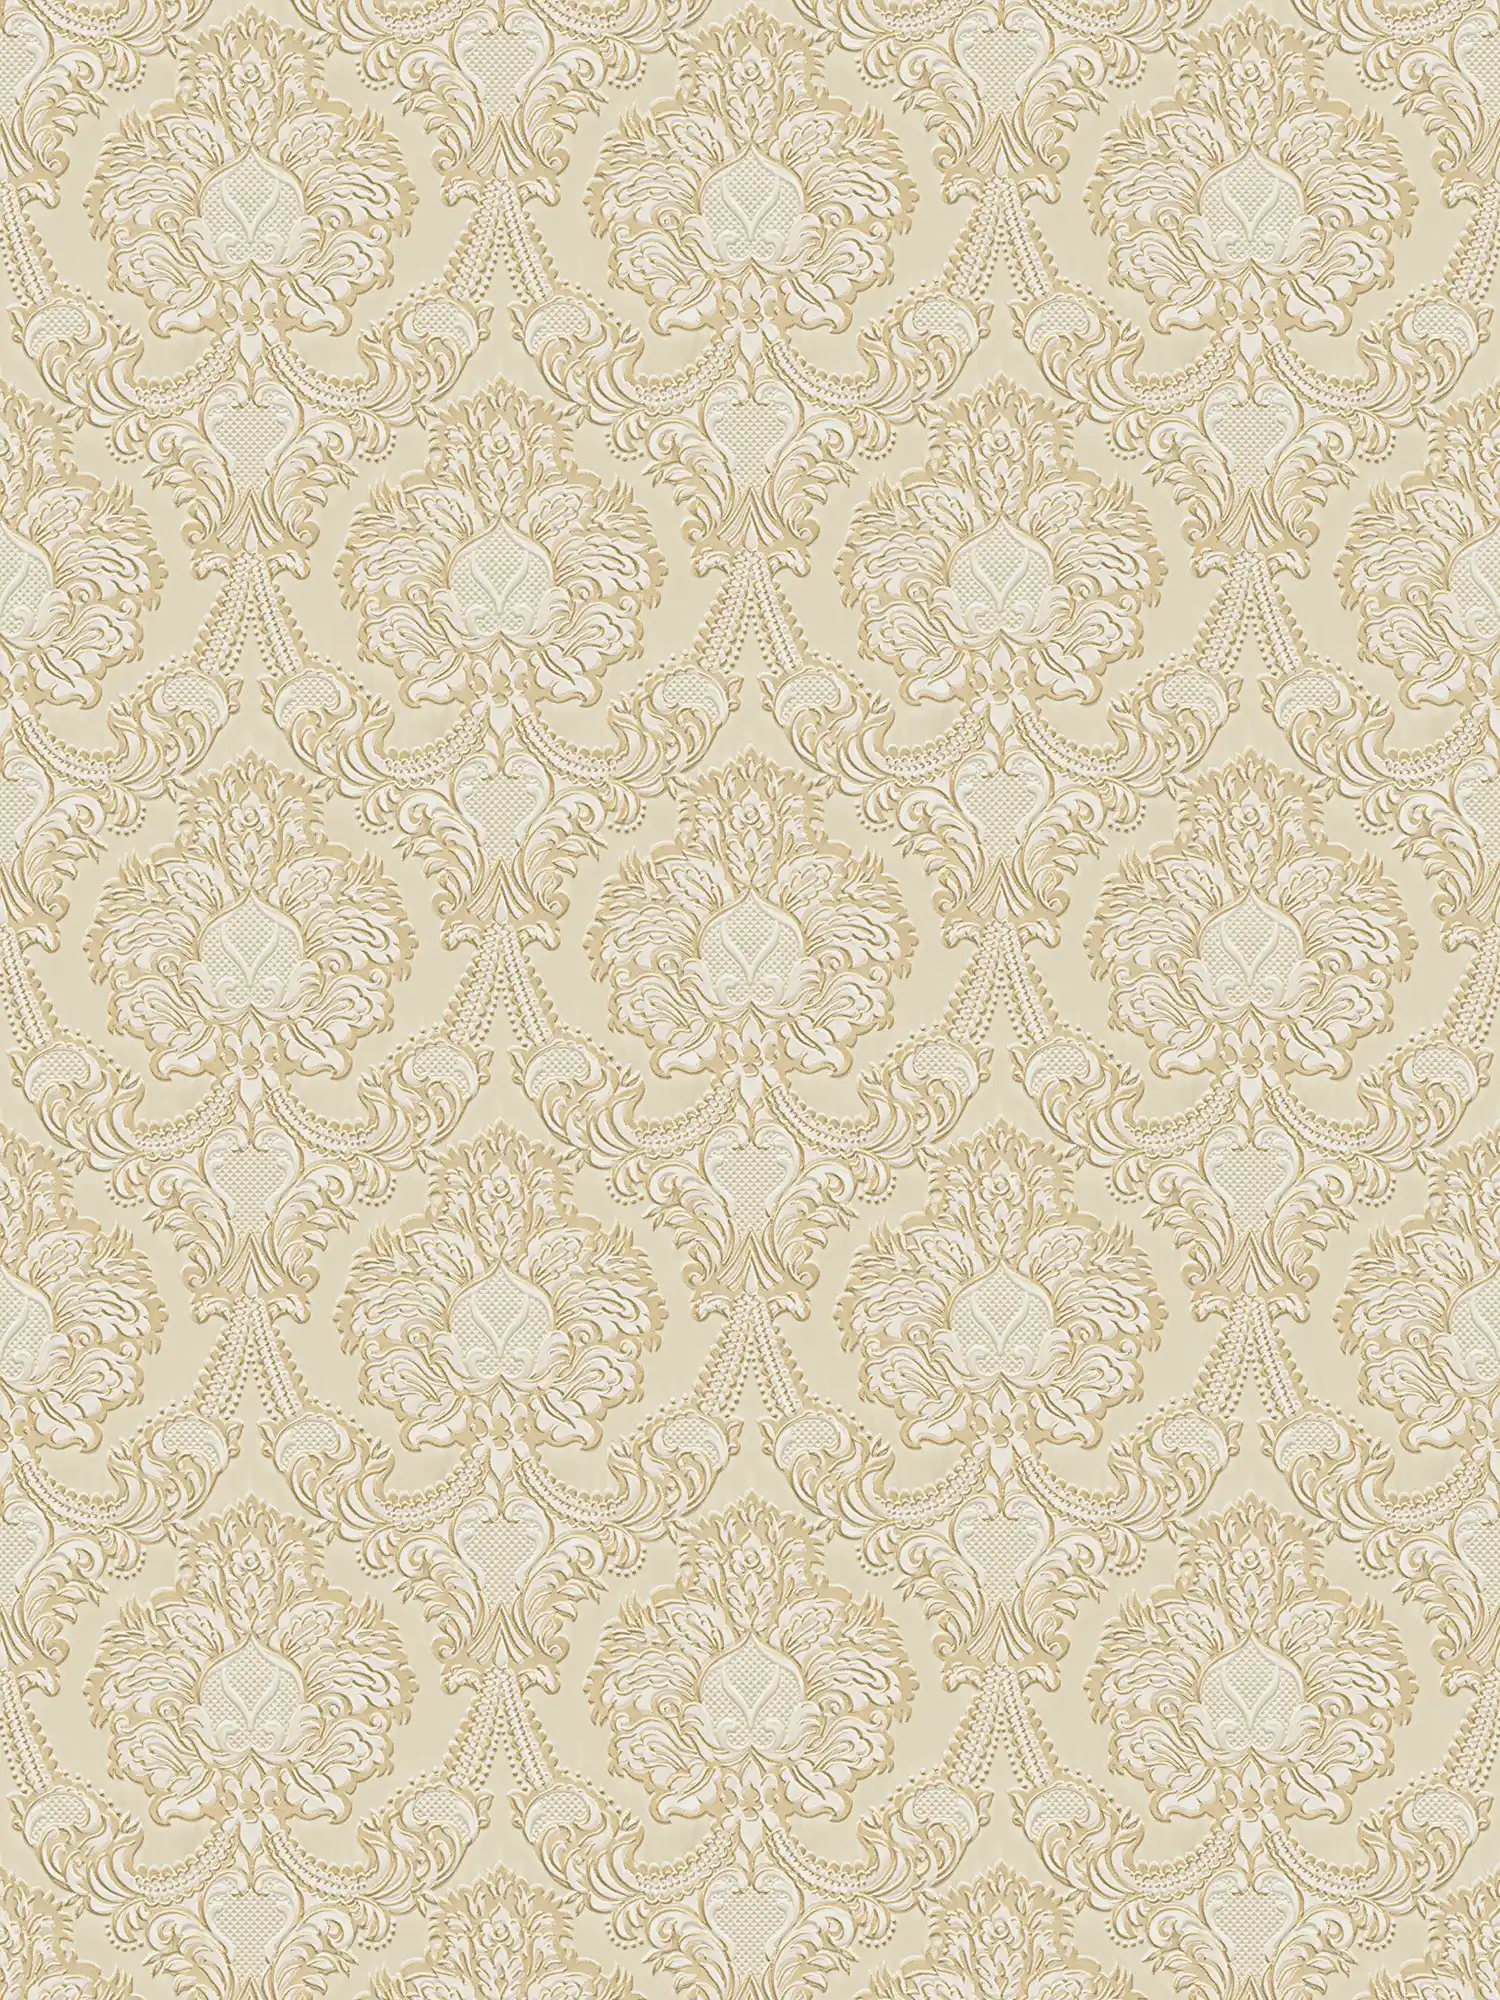 Opulent ornament wallpaper, golden accents - gold, beige, cream
